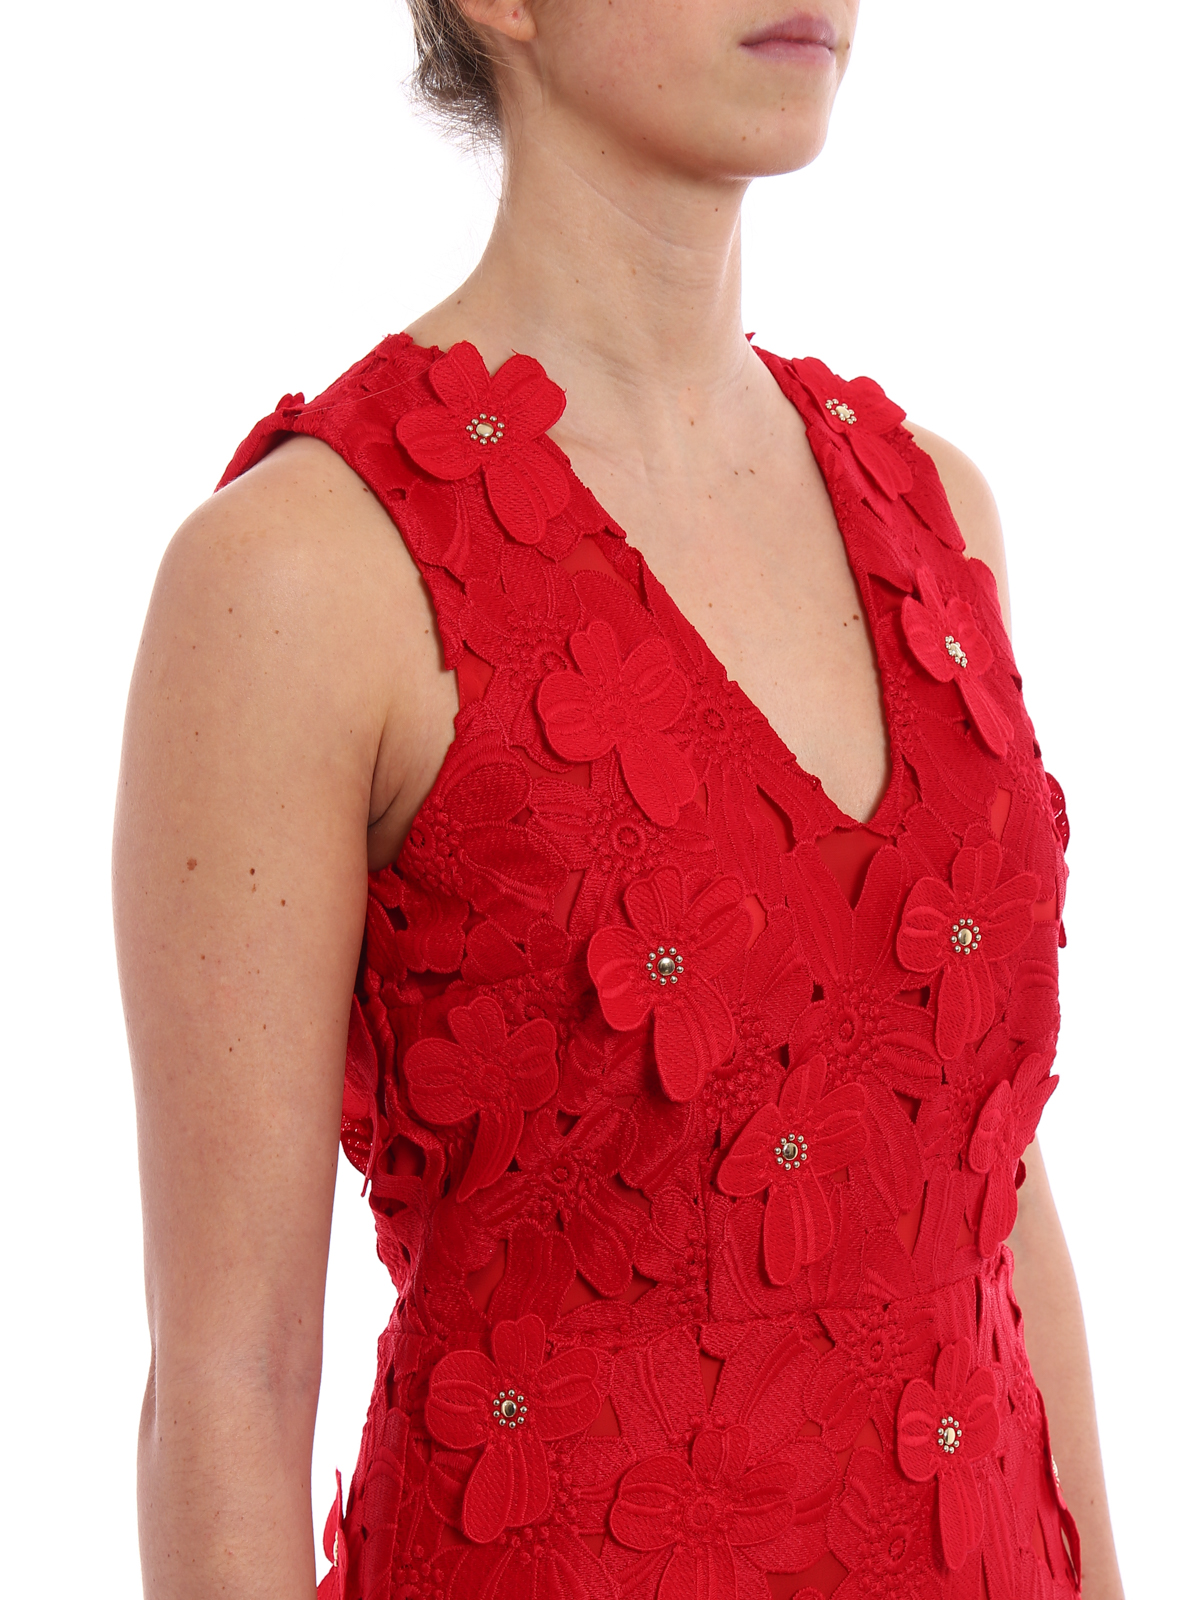 michael kors red floral dress